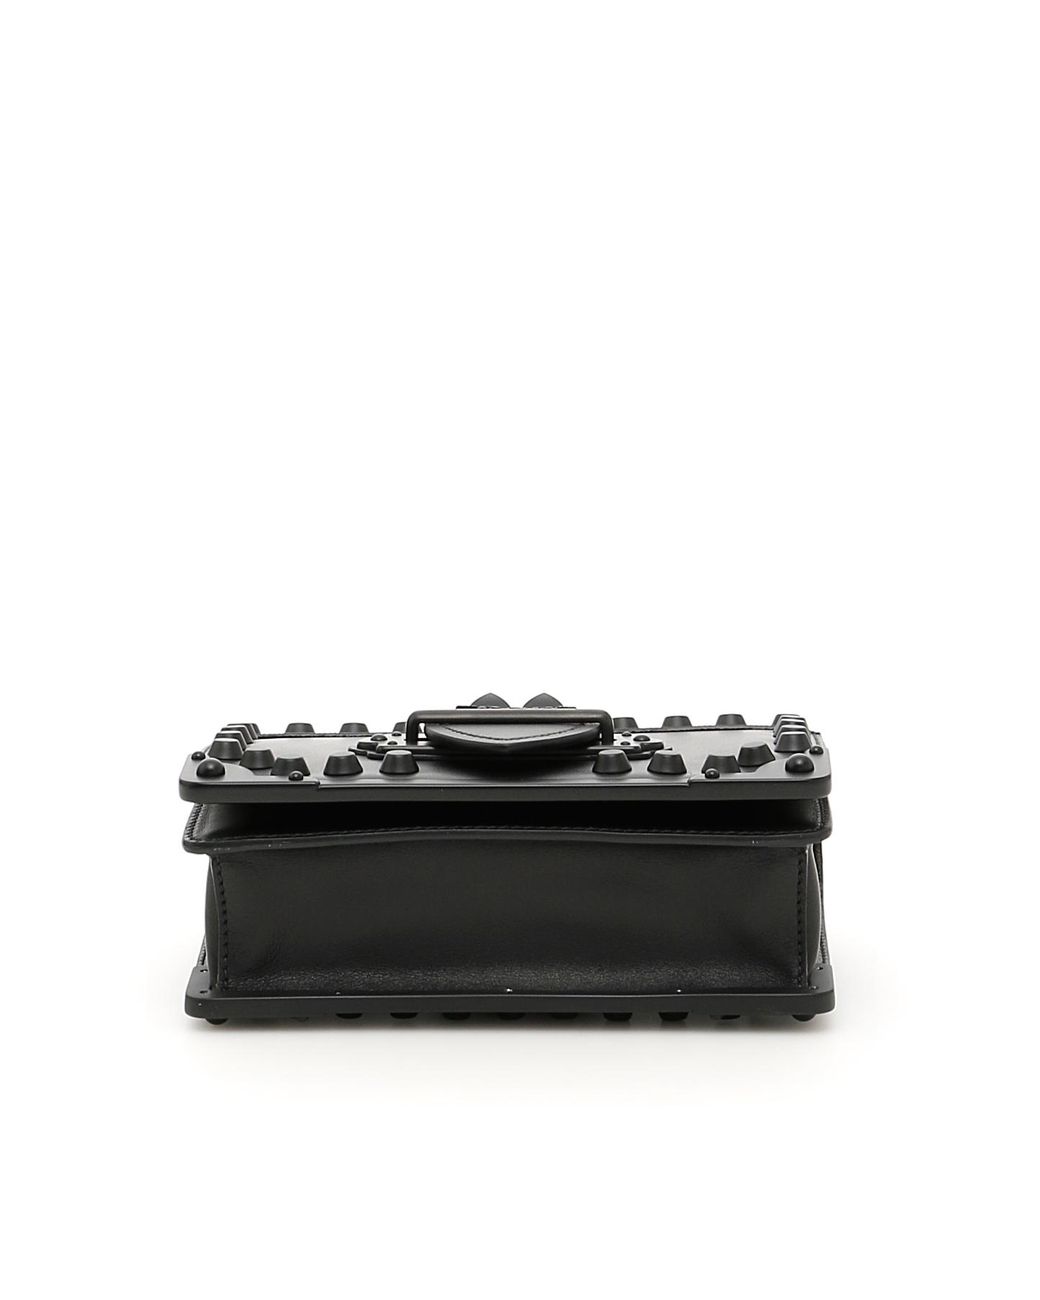 Prada Studded Cahier Bag in Black | Lyst